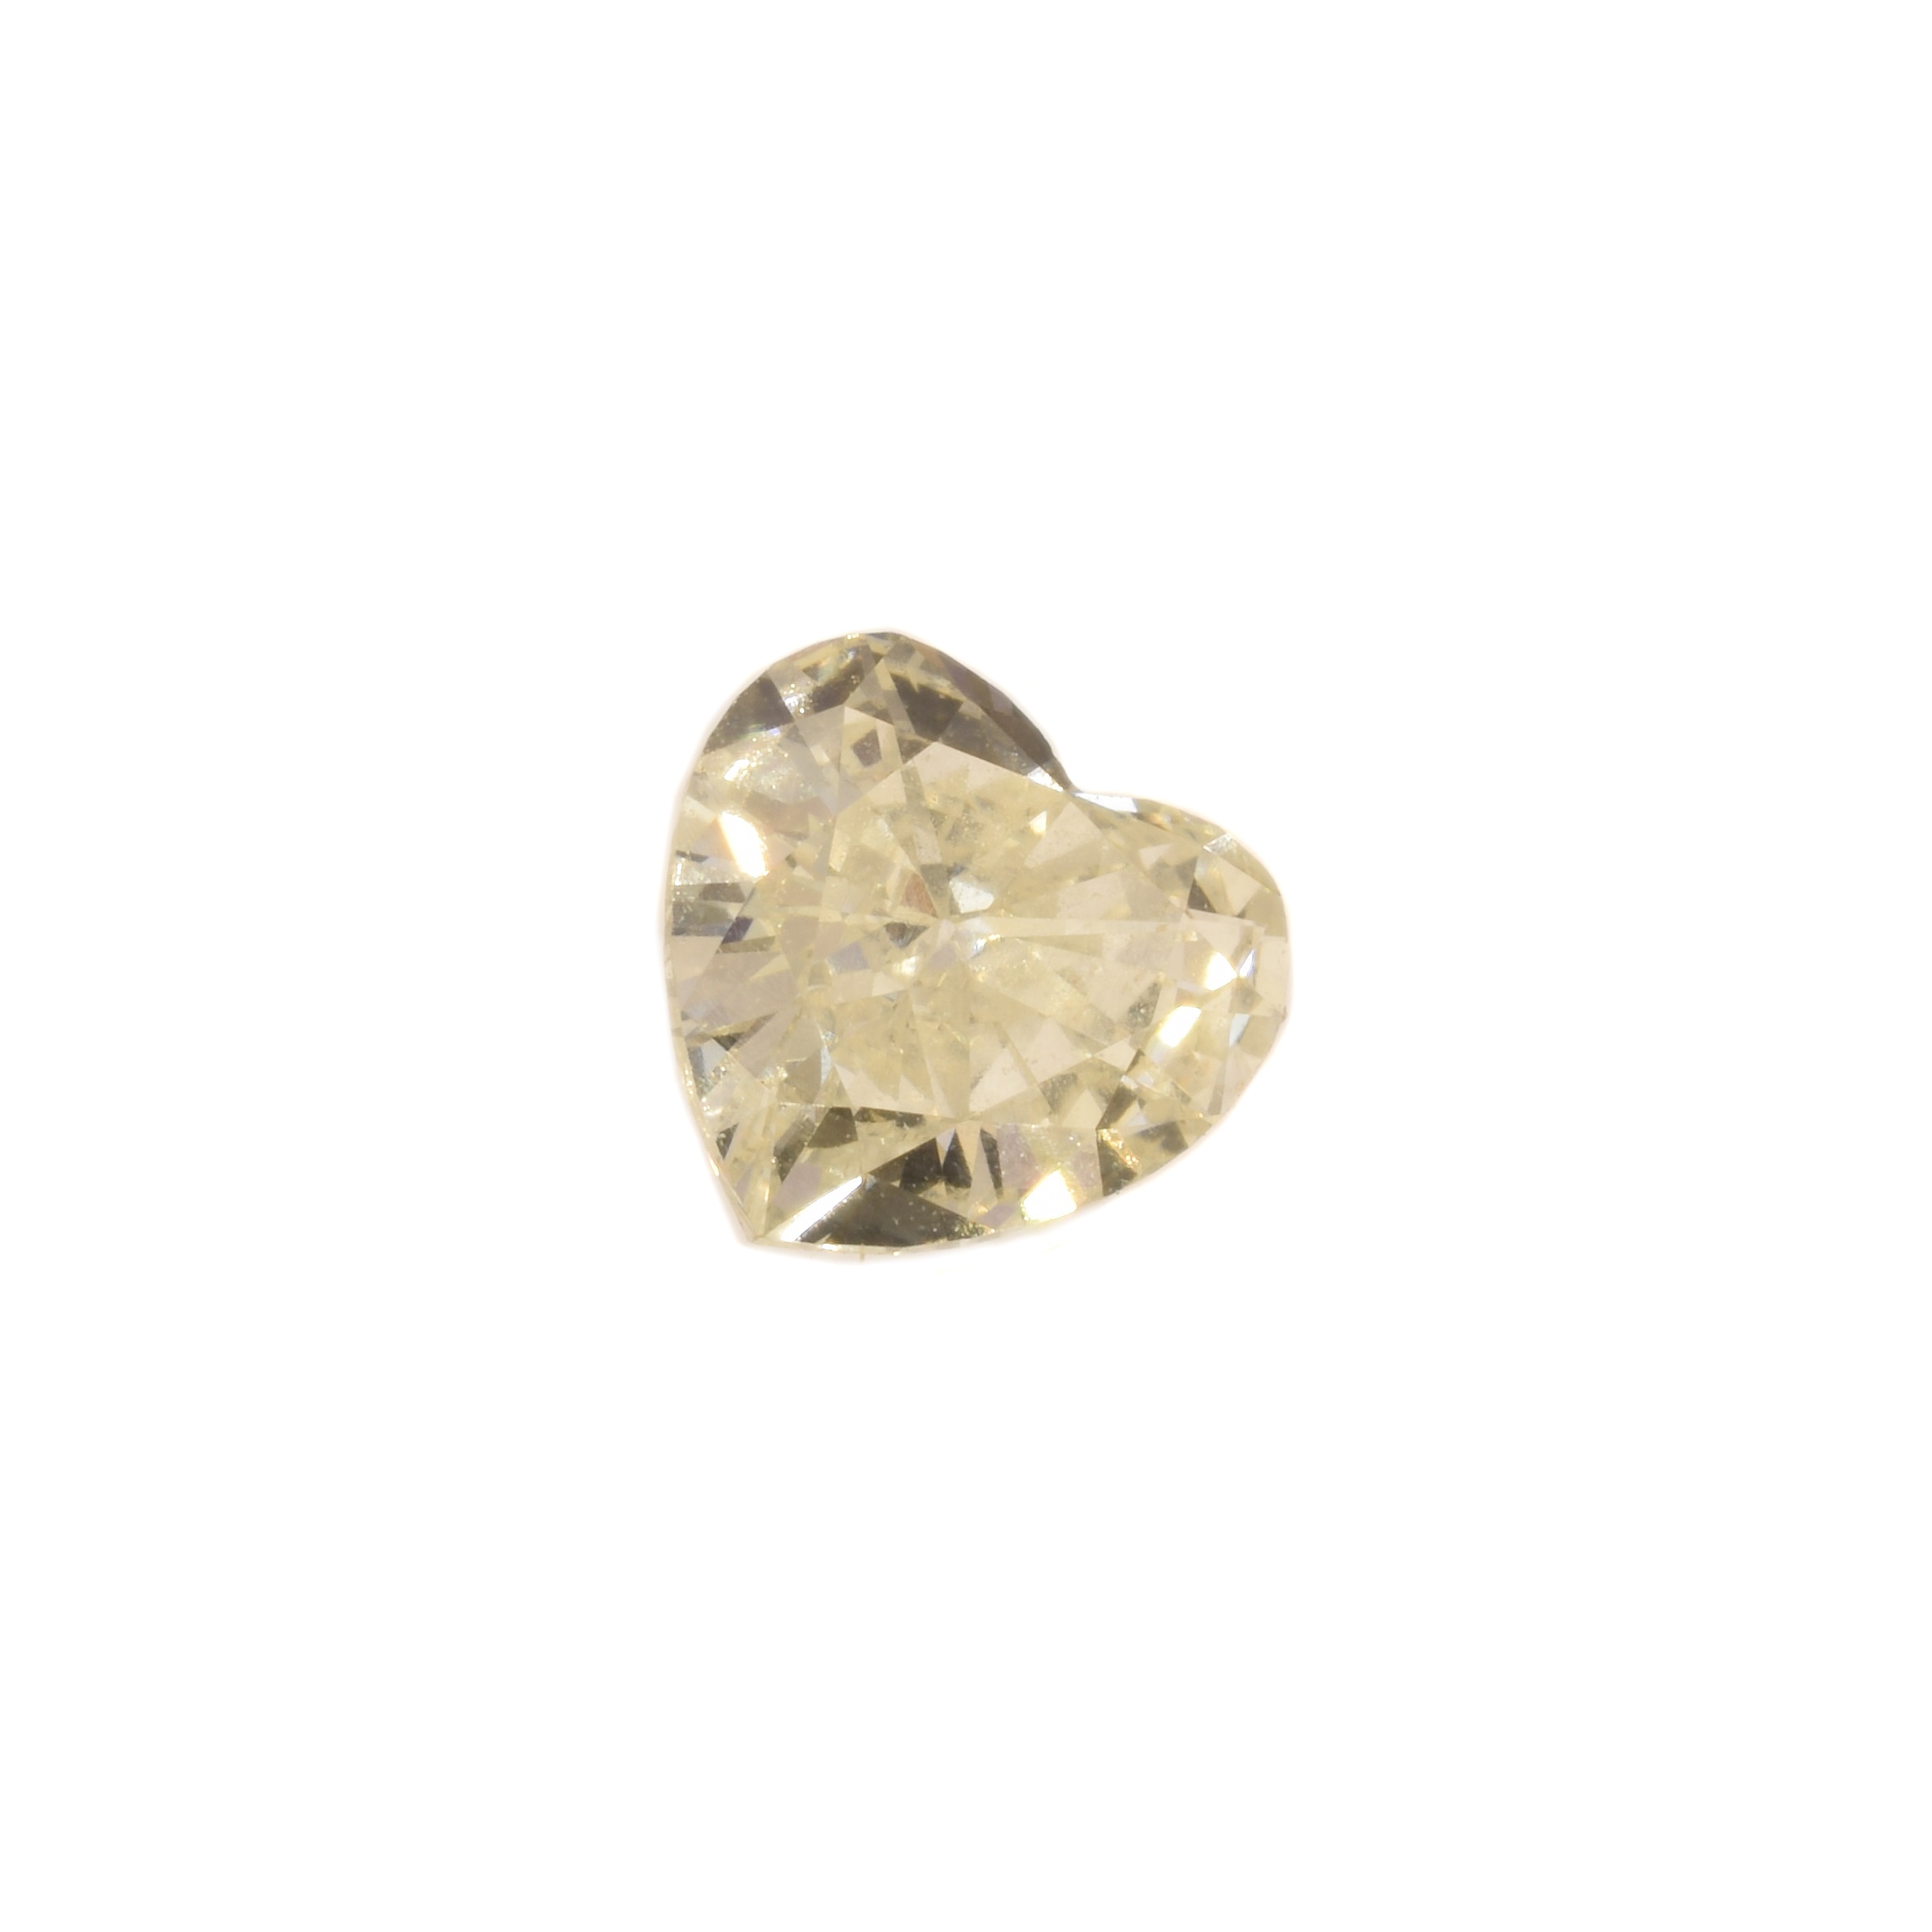 A loose heart cut diamond weighing 0.40ct,